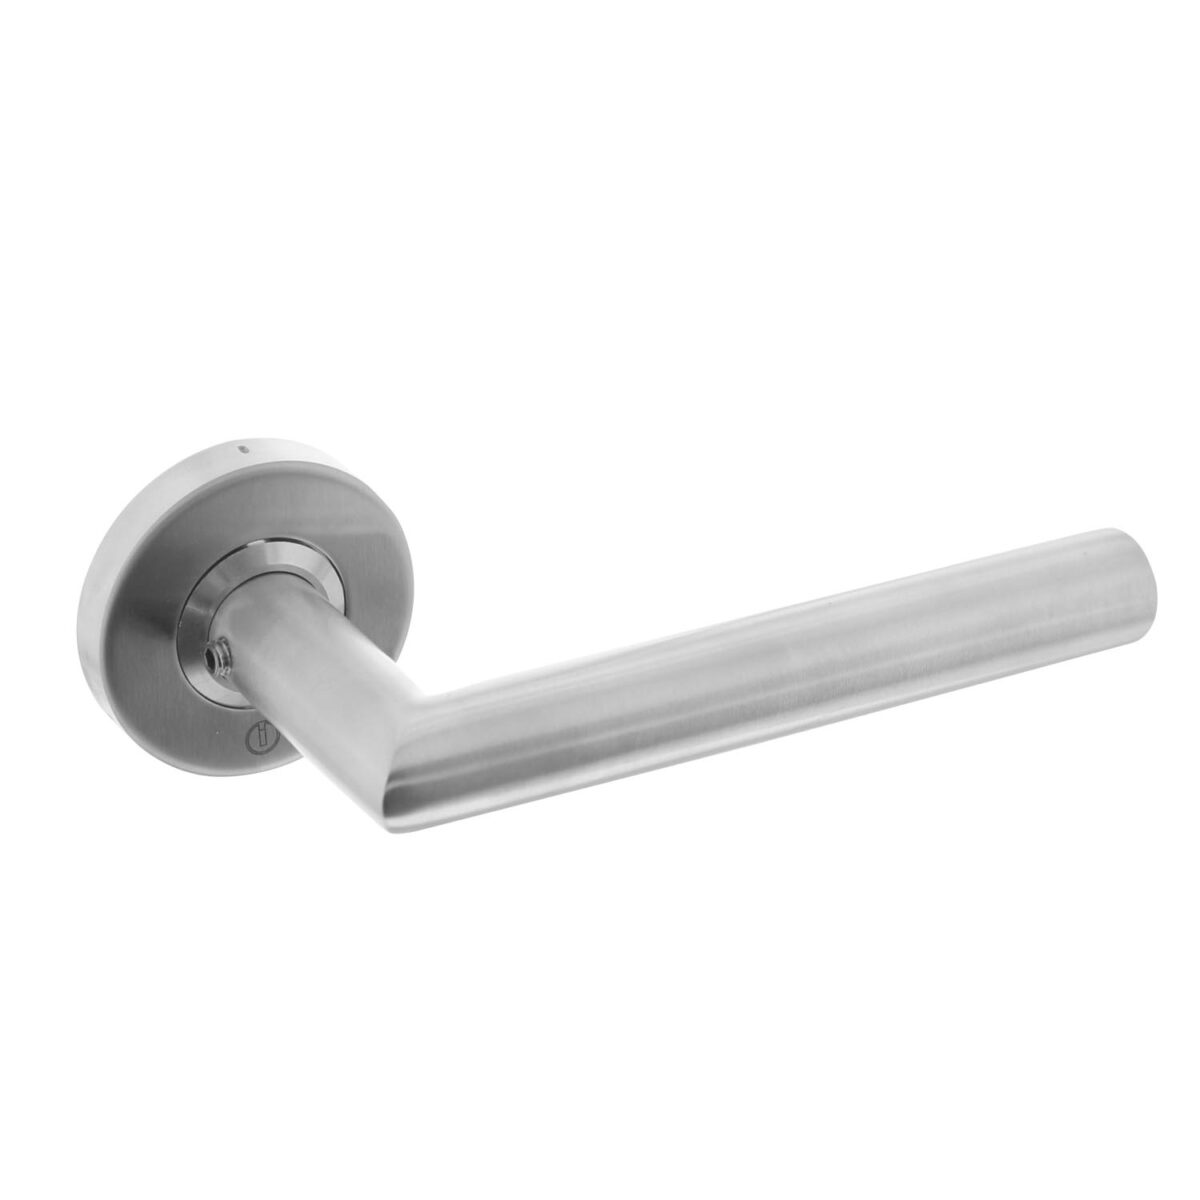 Buy top quality door fittings, corner door handle, on rosette, stainless steel, brushed